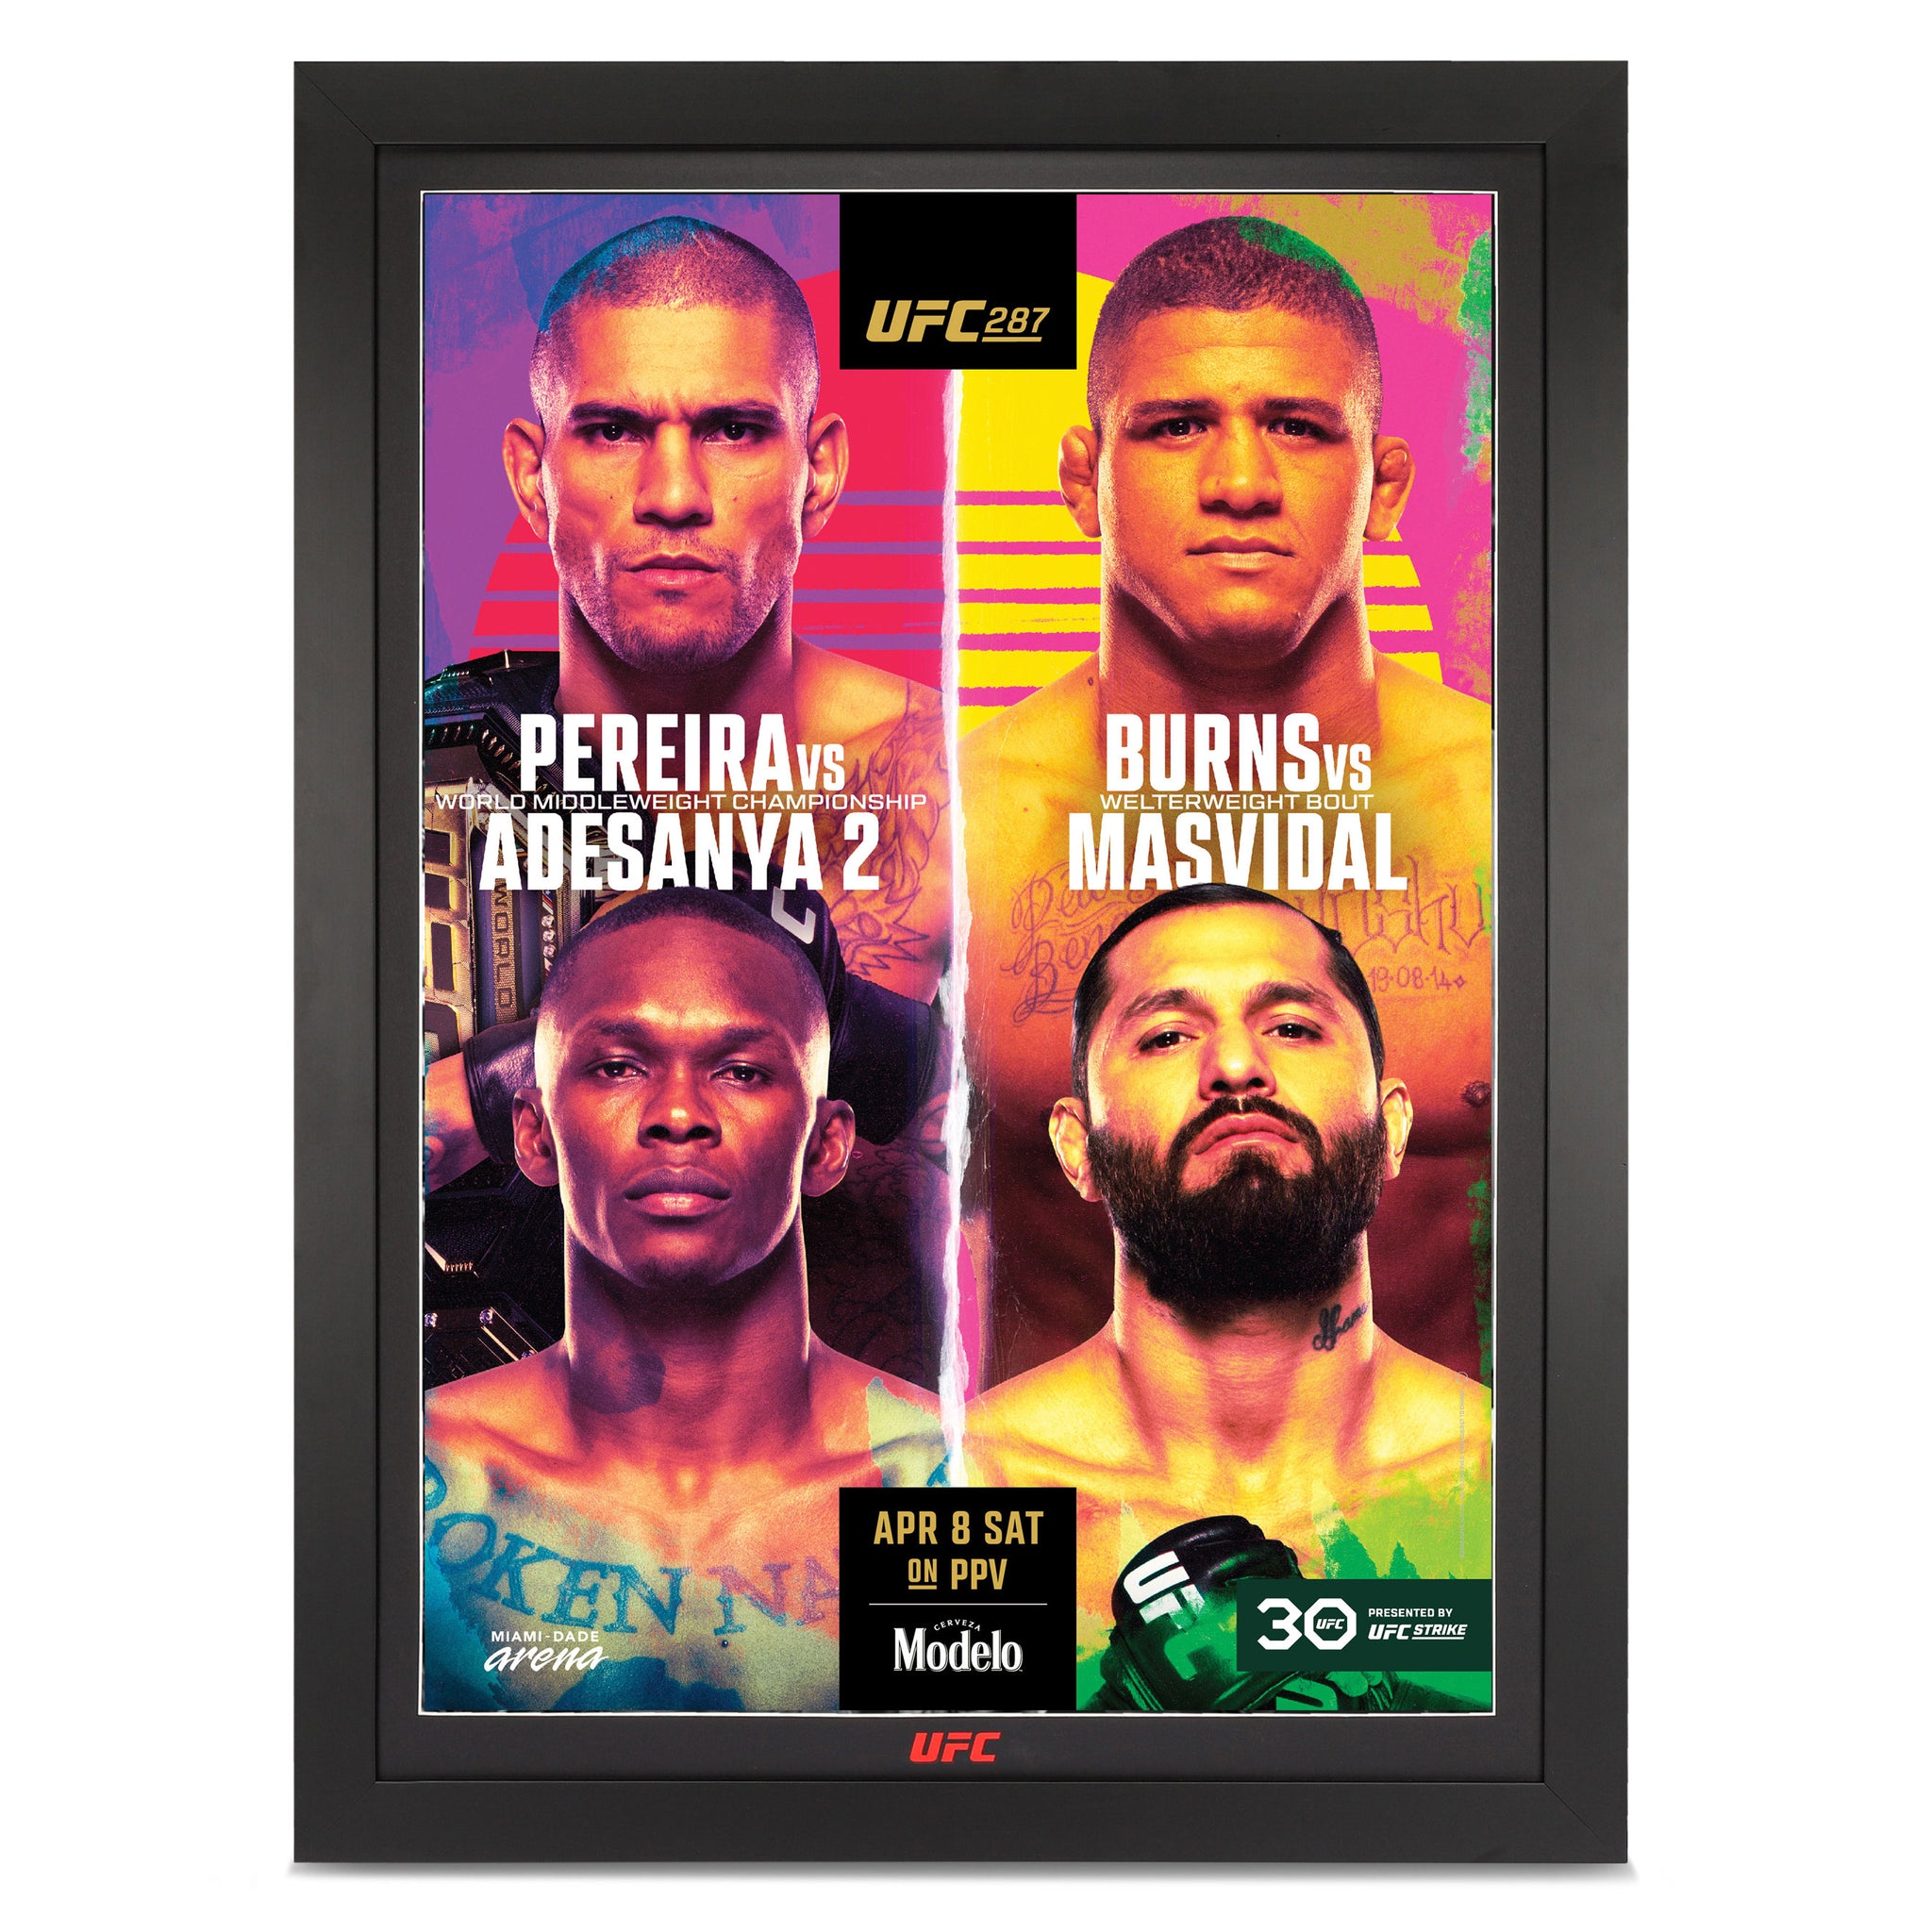 Celebrate UFC 287 with exclusive merchandise - UFC Store